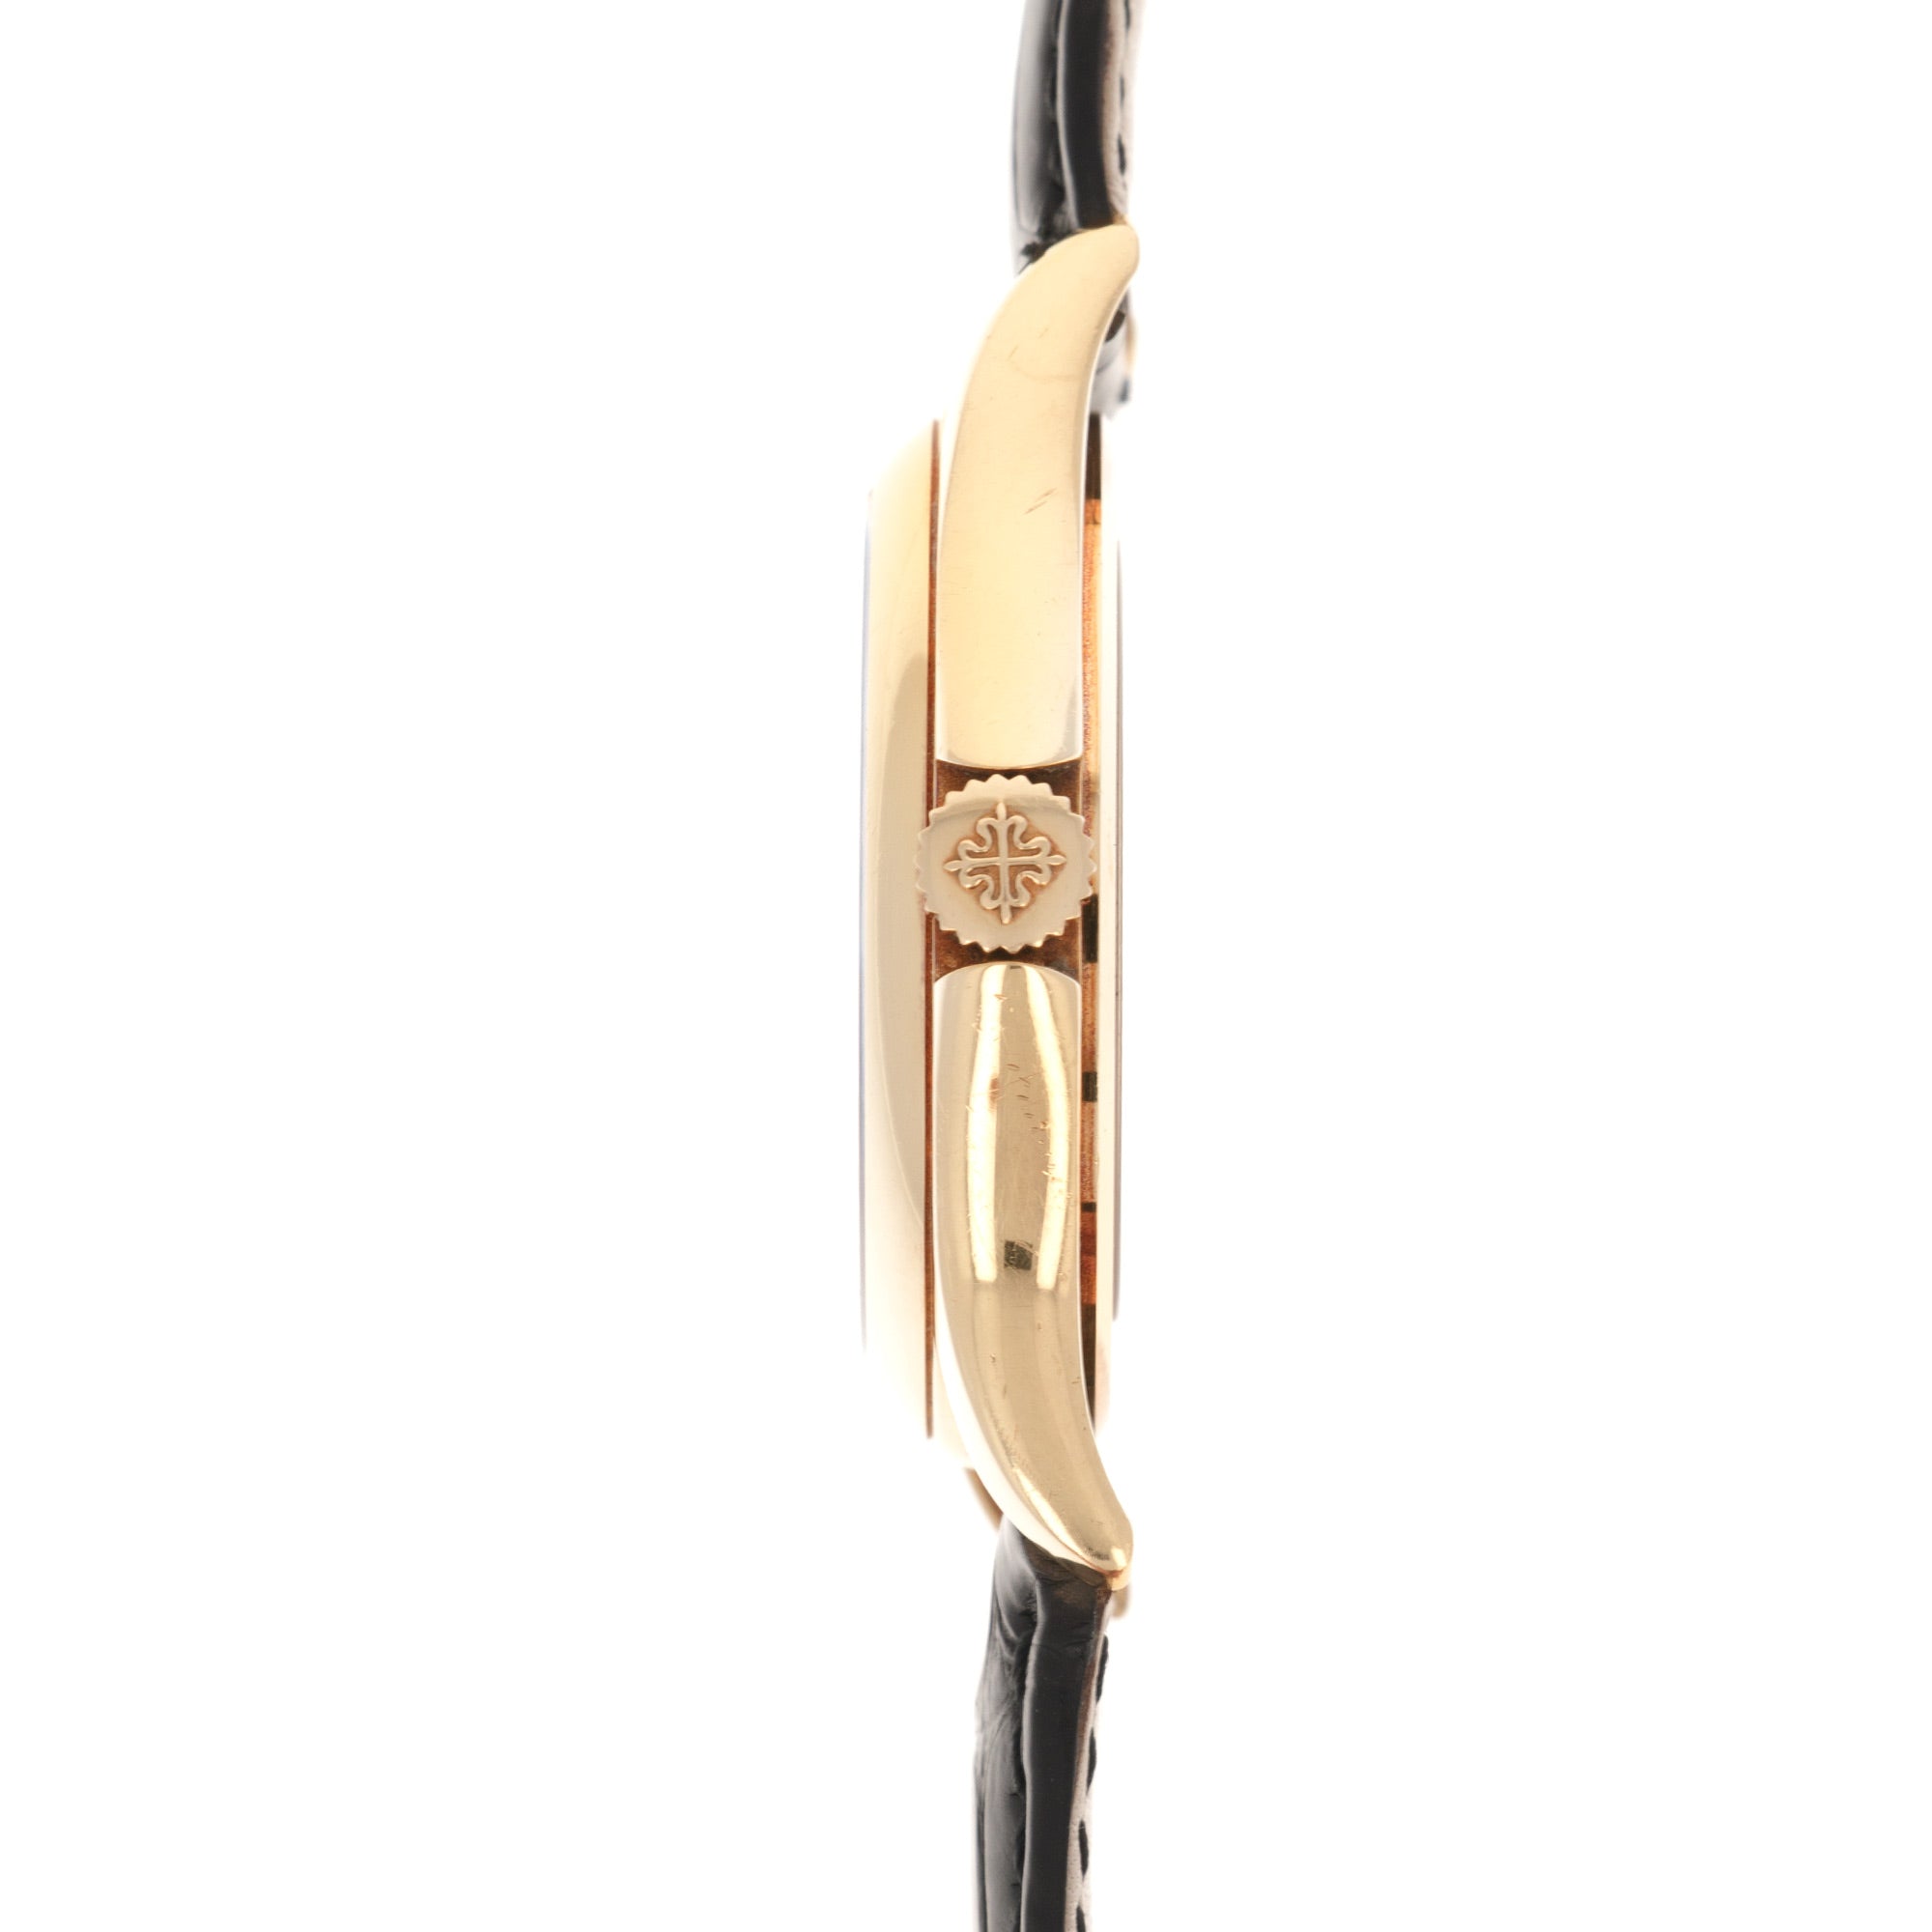 Patek Philippe - Patek Philippe Yellow Gold World Time Watch Ref. 5110, Made for Doha, Qatar - The Keystone Watches